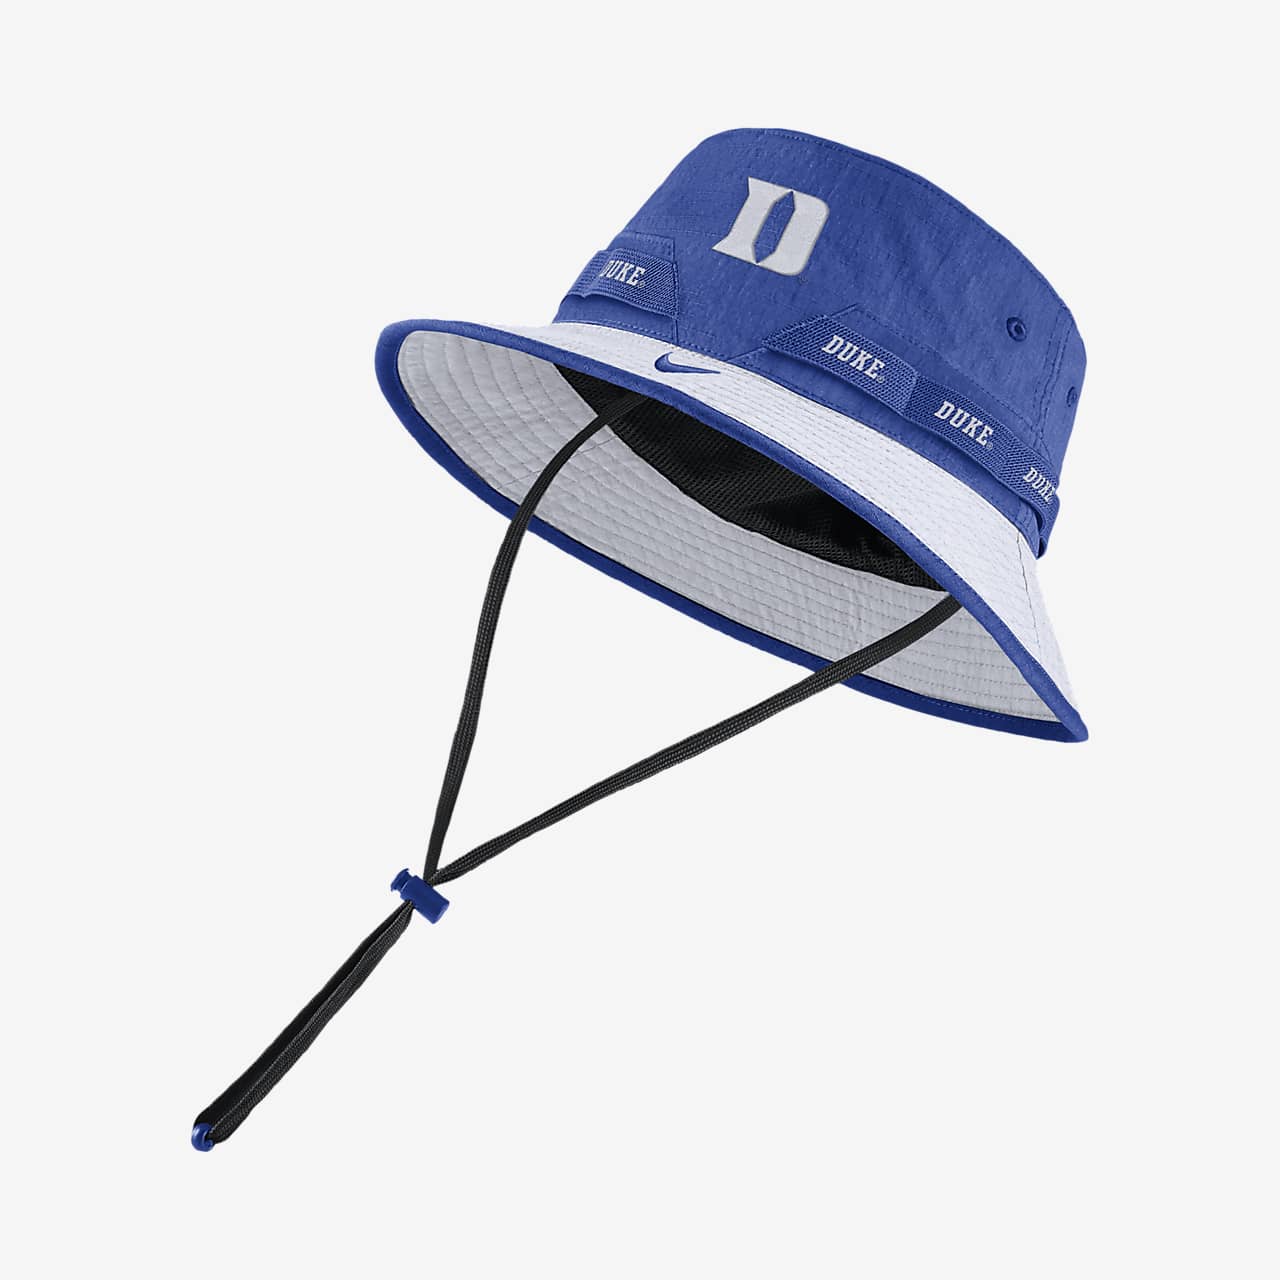 Nike College Dri-FIT (Duke) Bucket Hat 